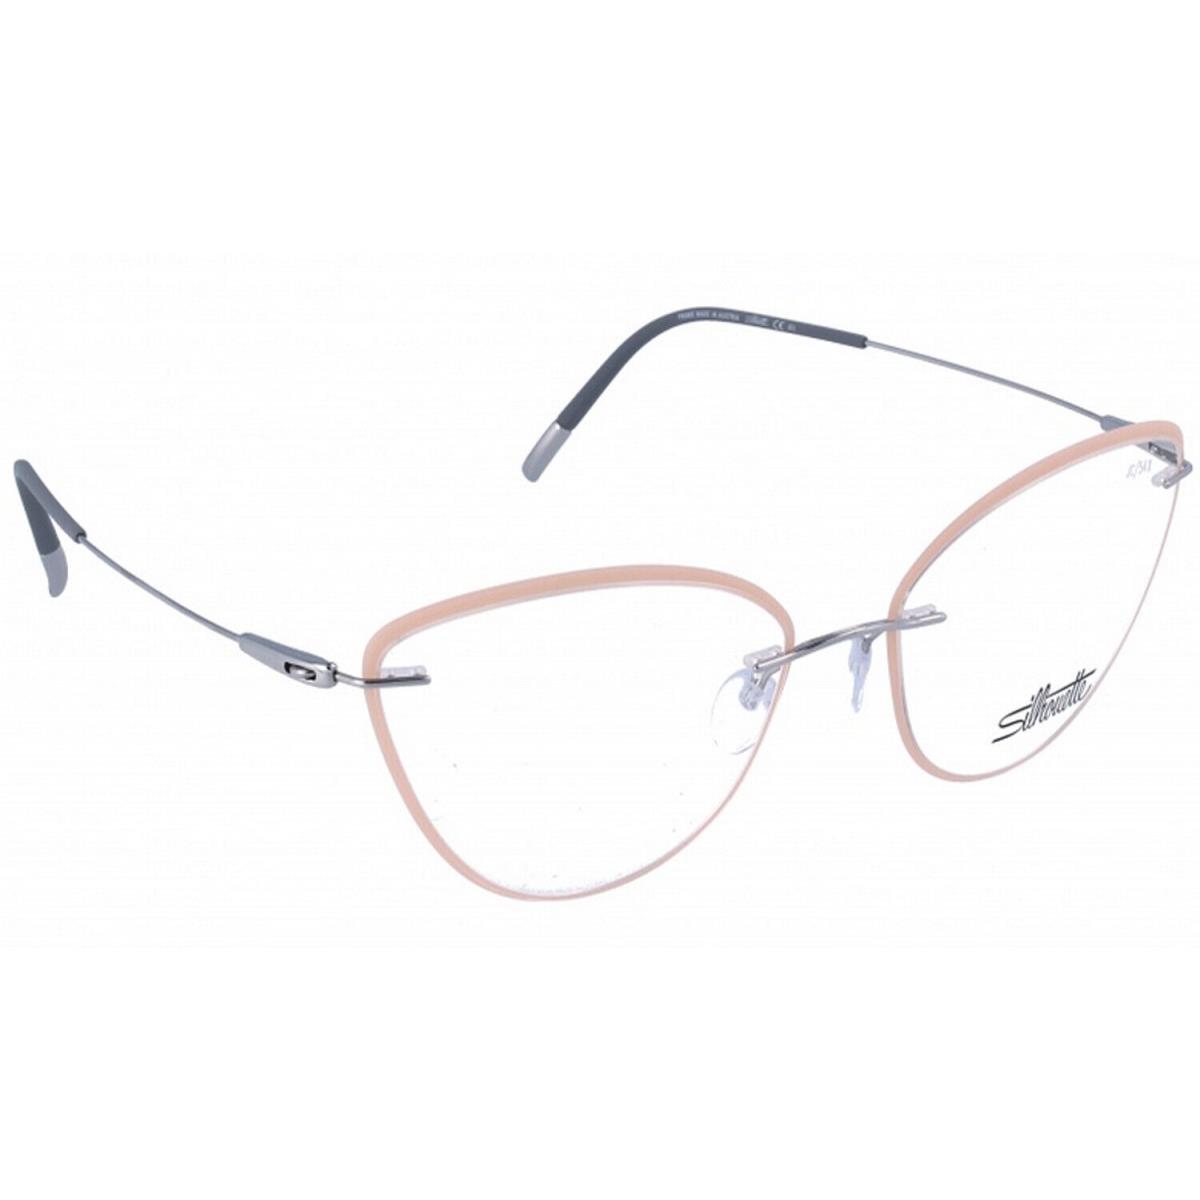 Silhouette Eyeglasses Dynamics Colorwave 54/17/135 Titanium/salmon 5500/JC-7310